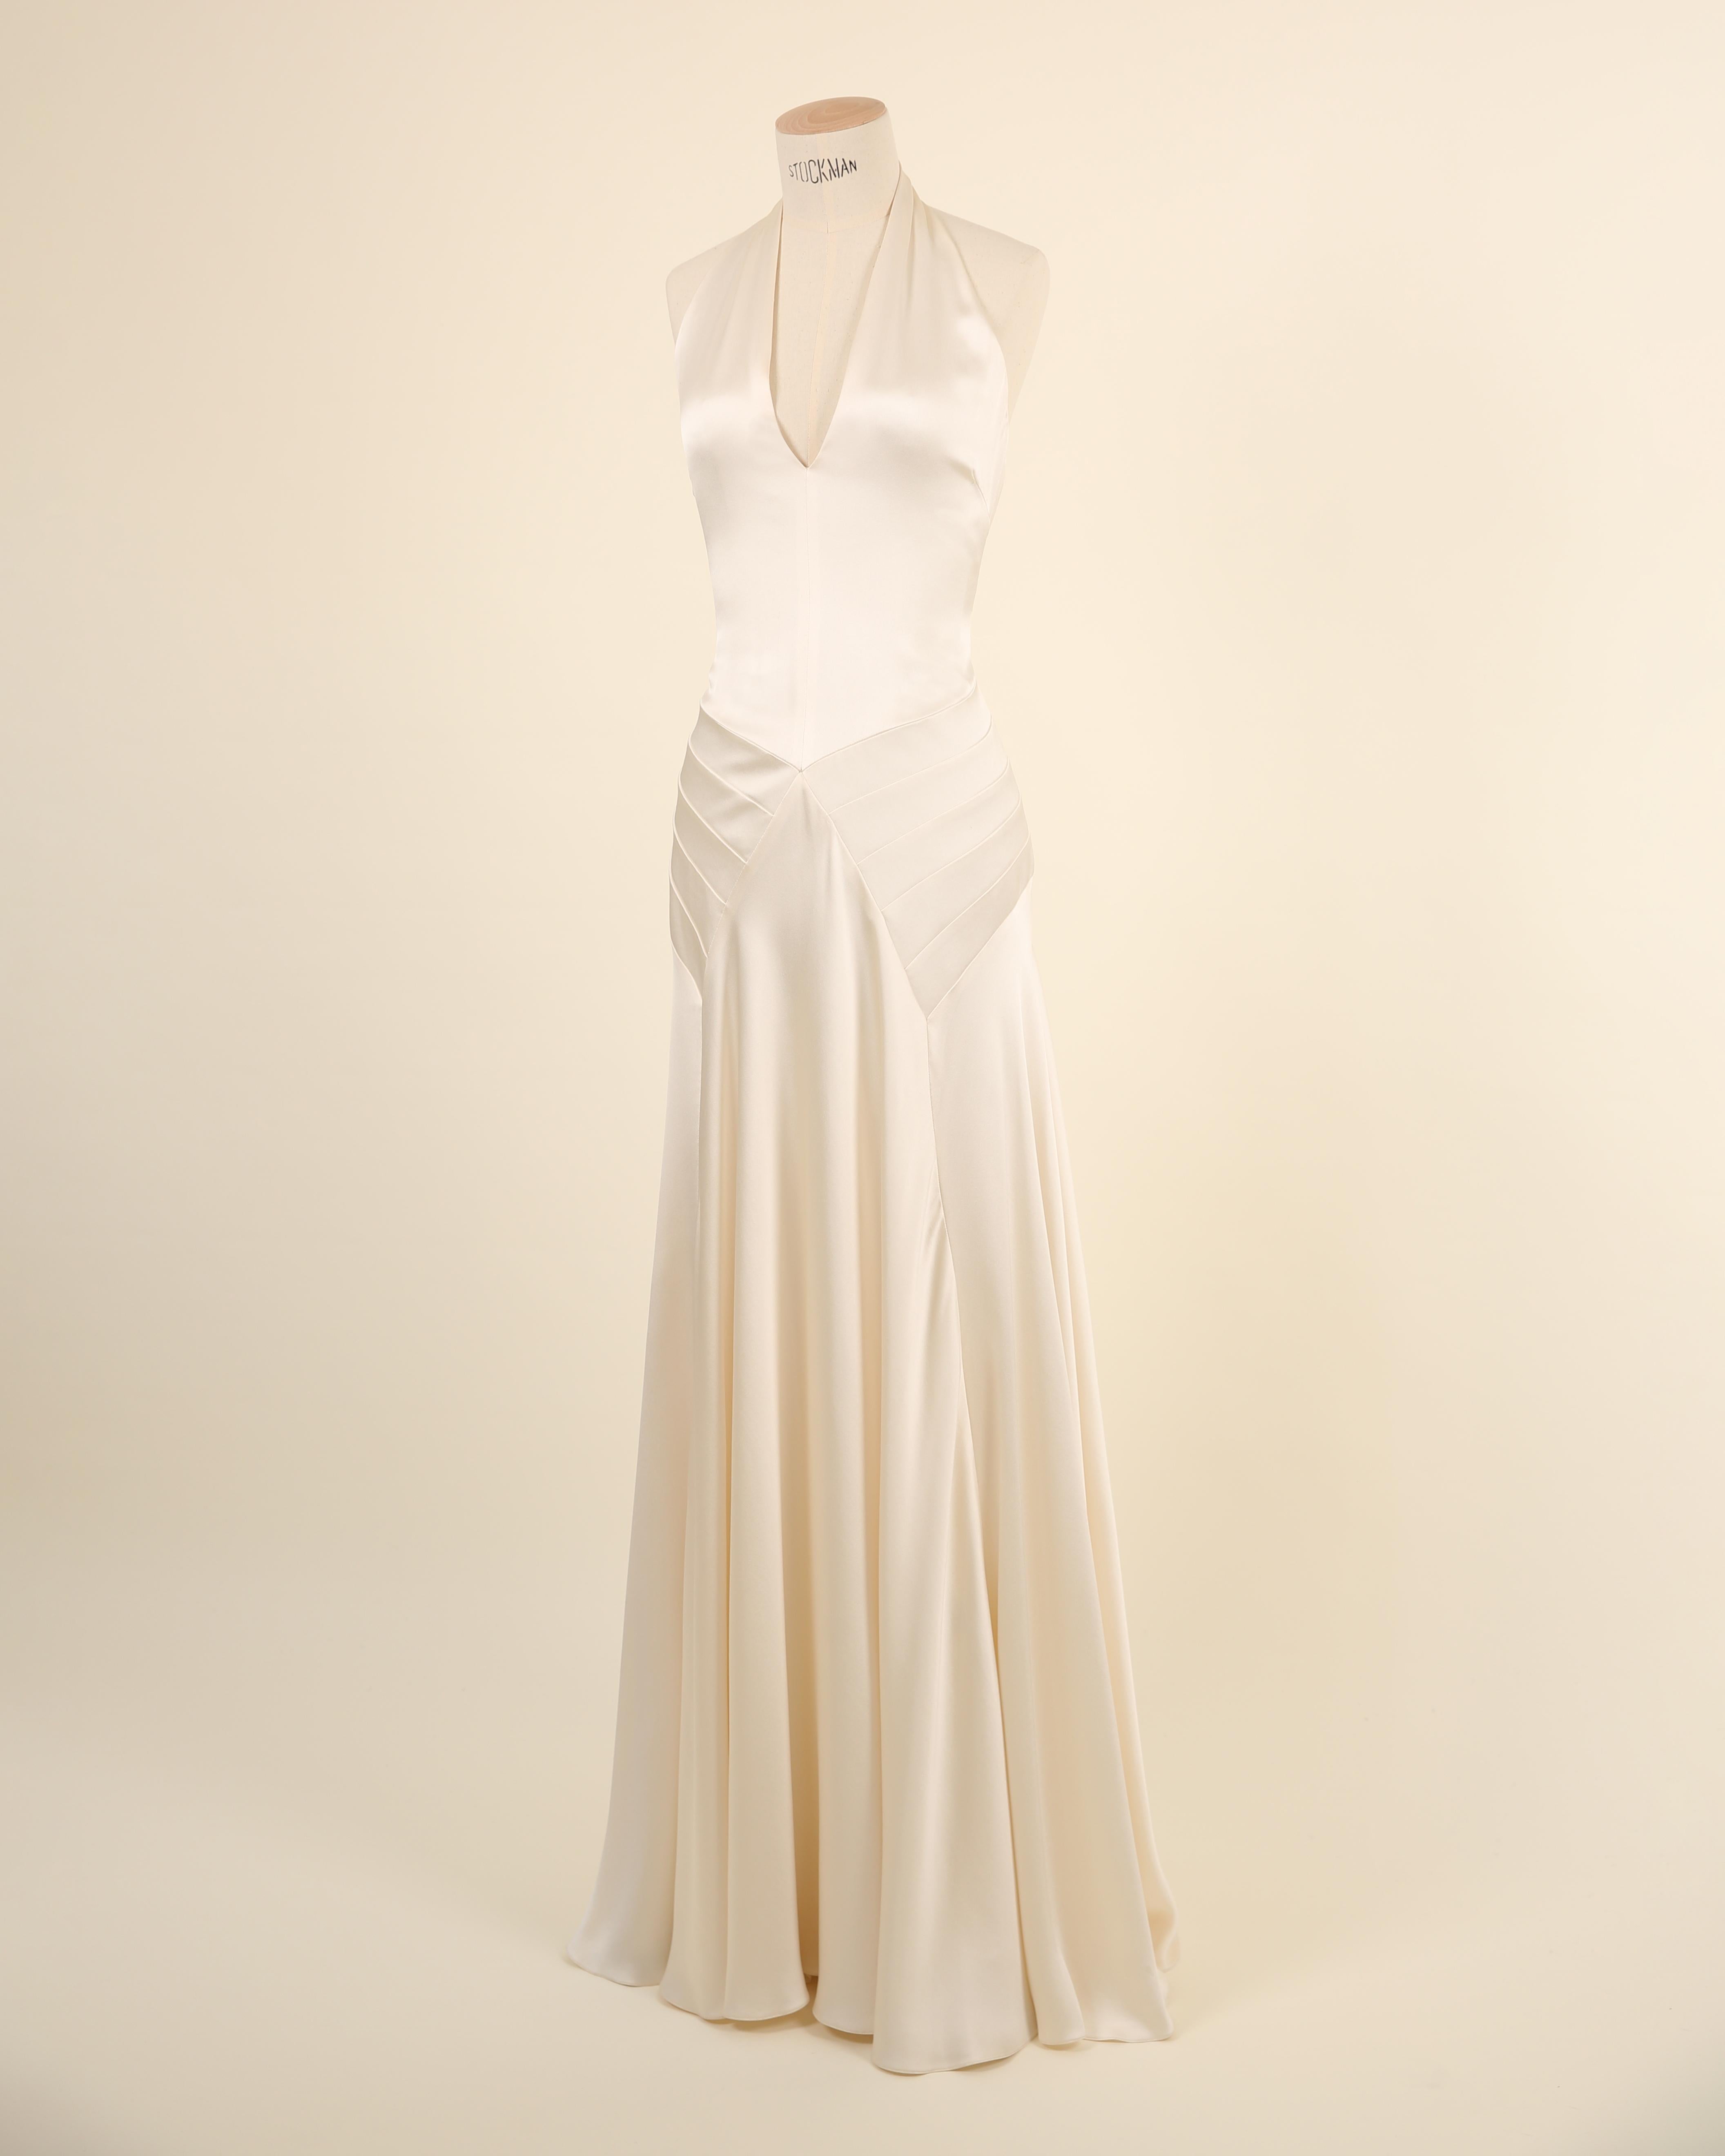 Women's Ralph Lauren S/S 2009 white ivory silk plunging halter neck wedding gown dress For Sale